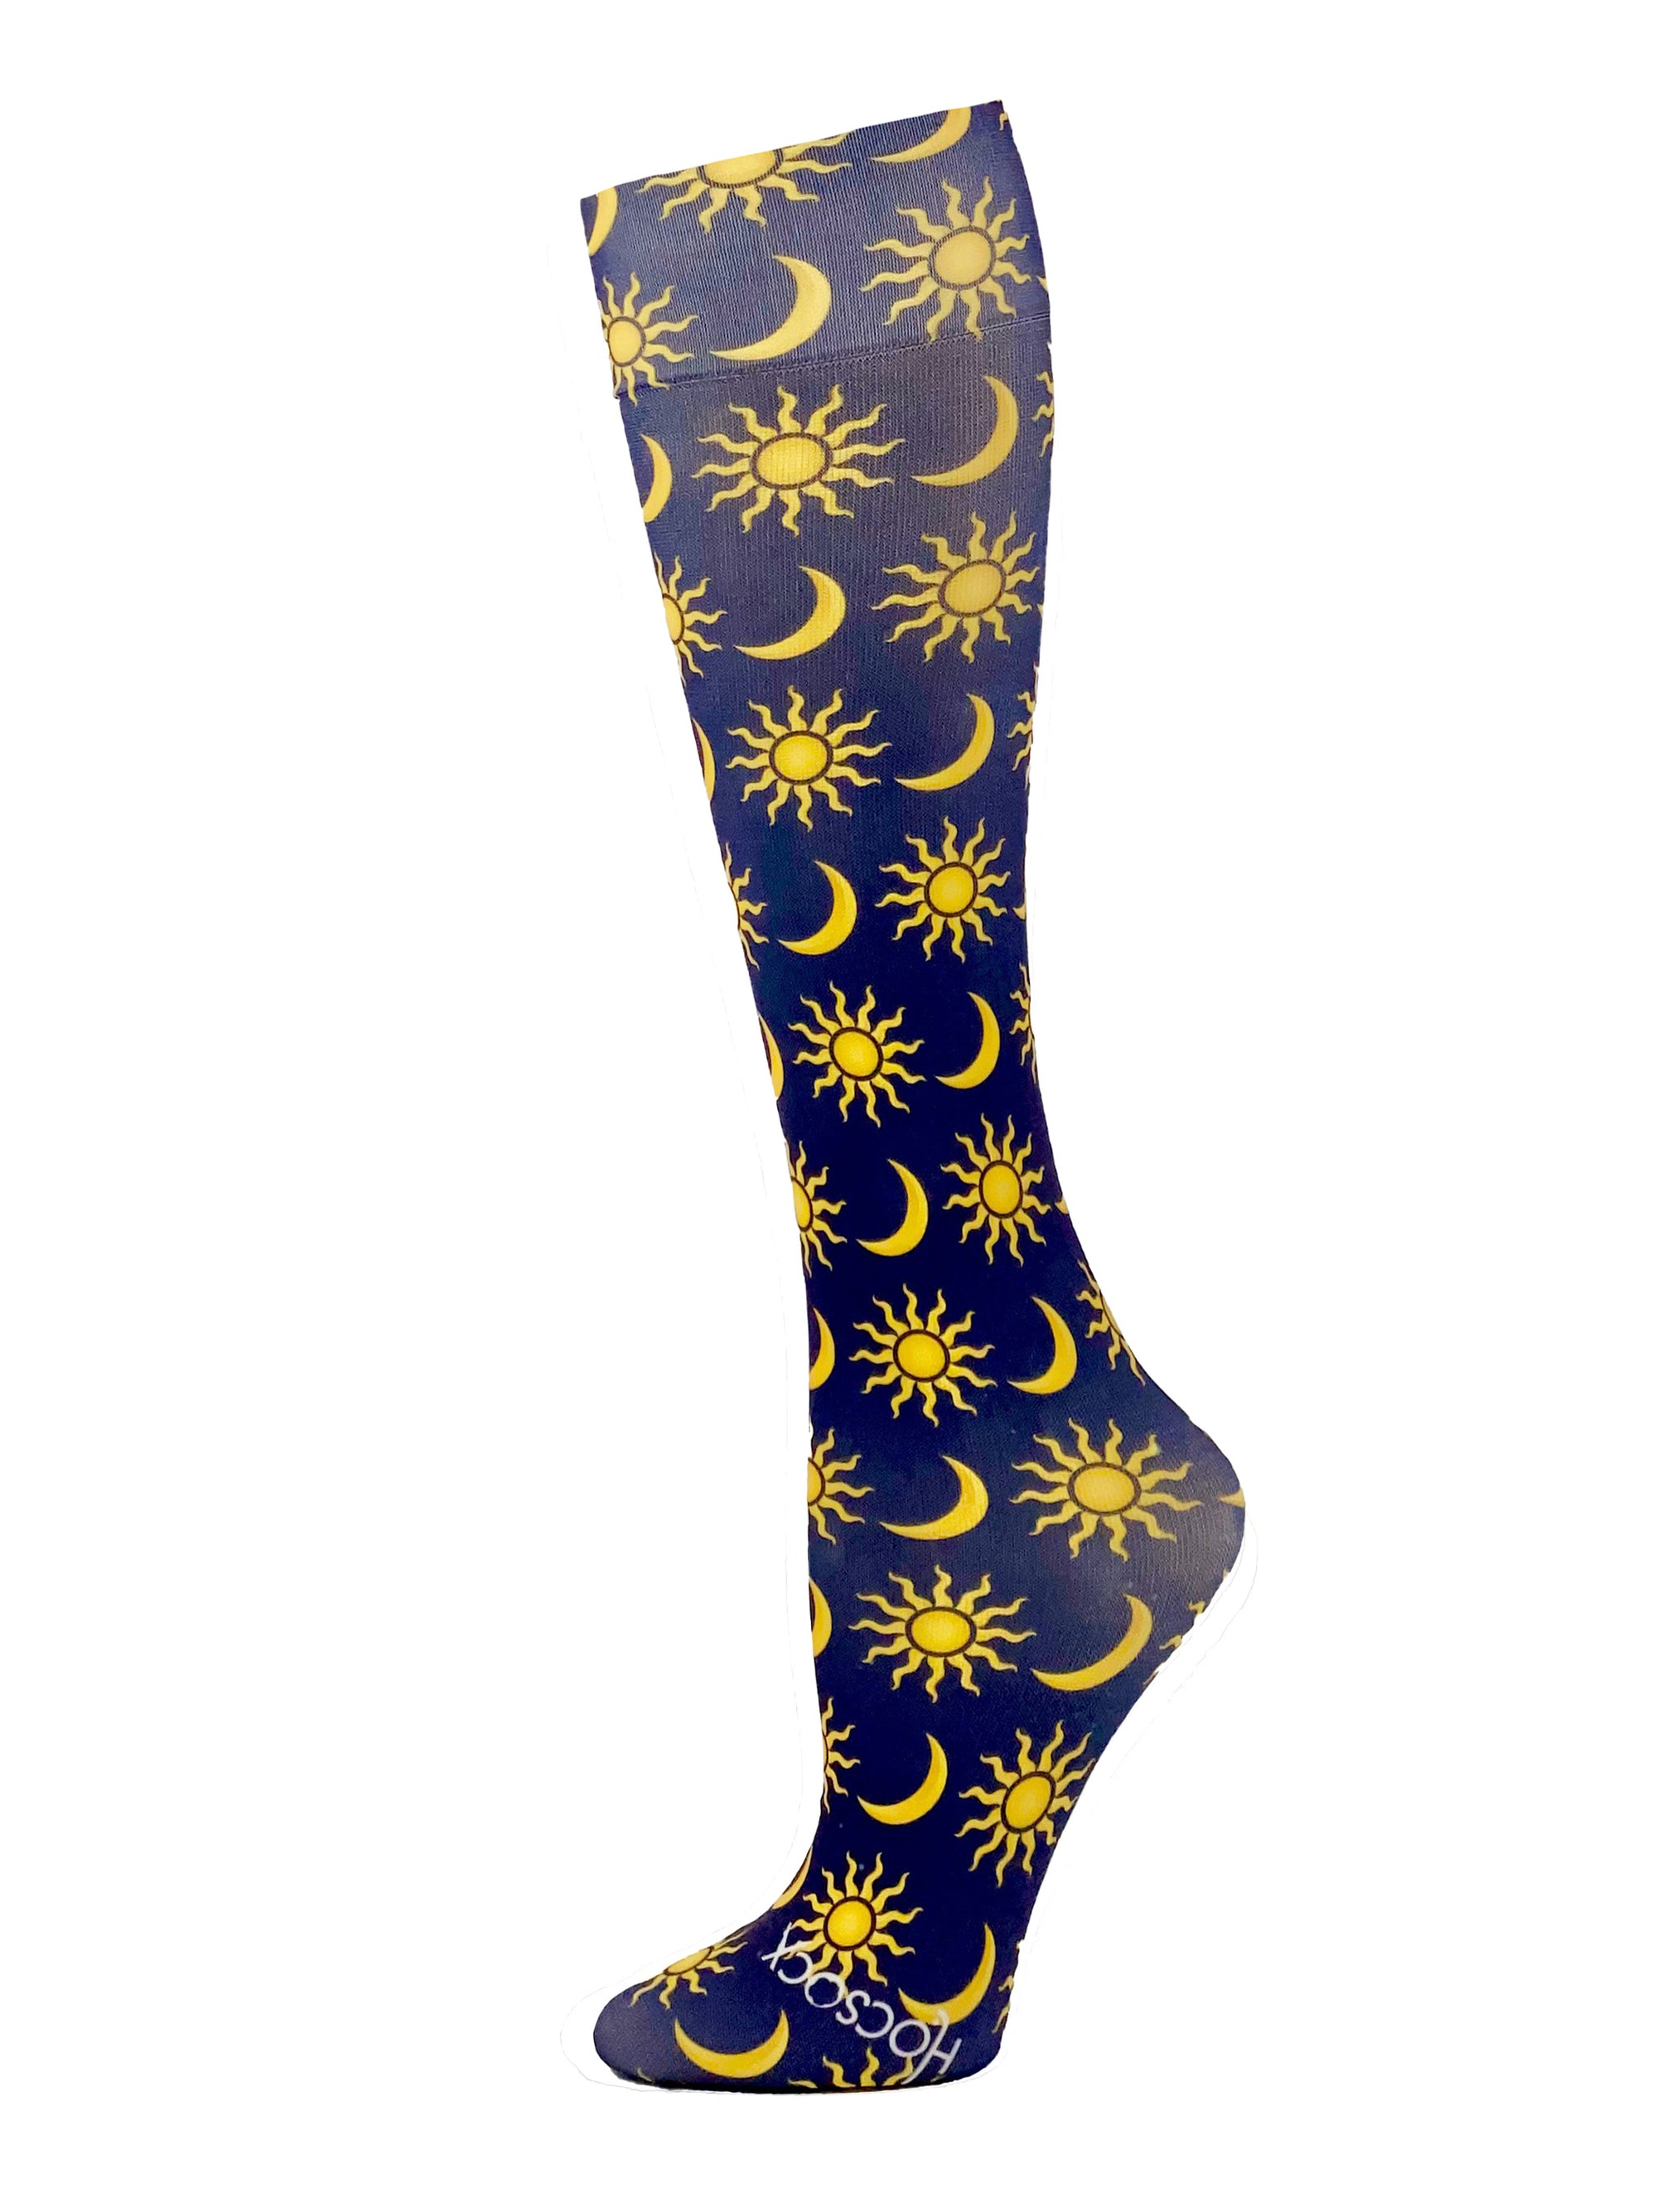 Celestial Socks